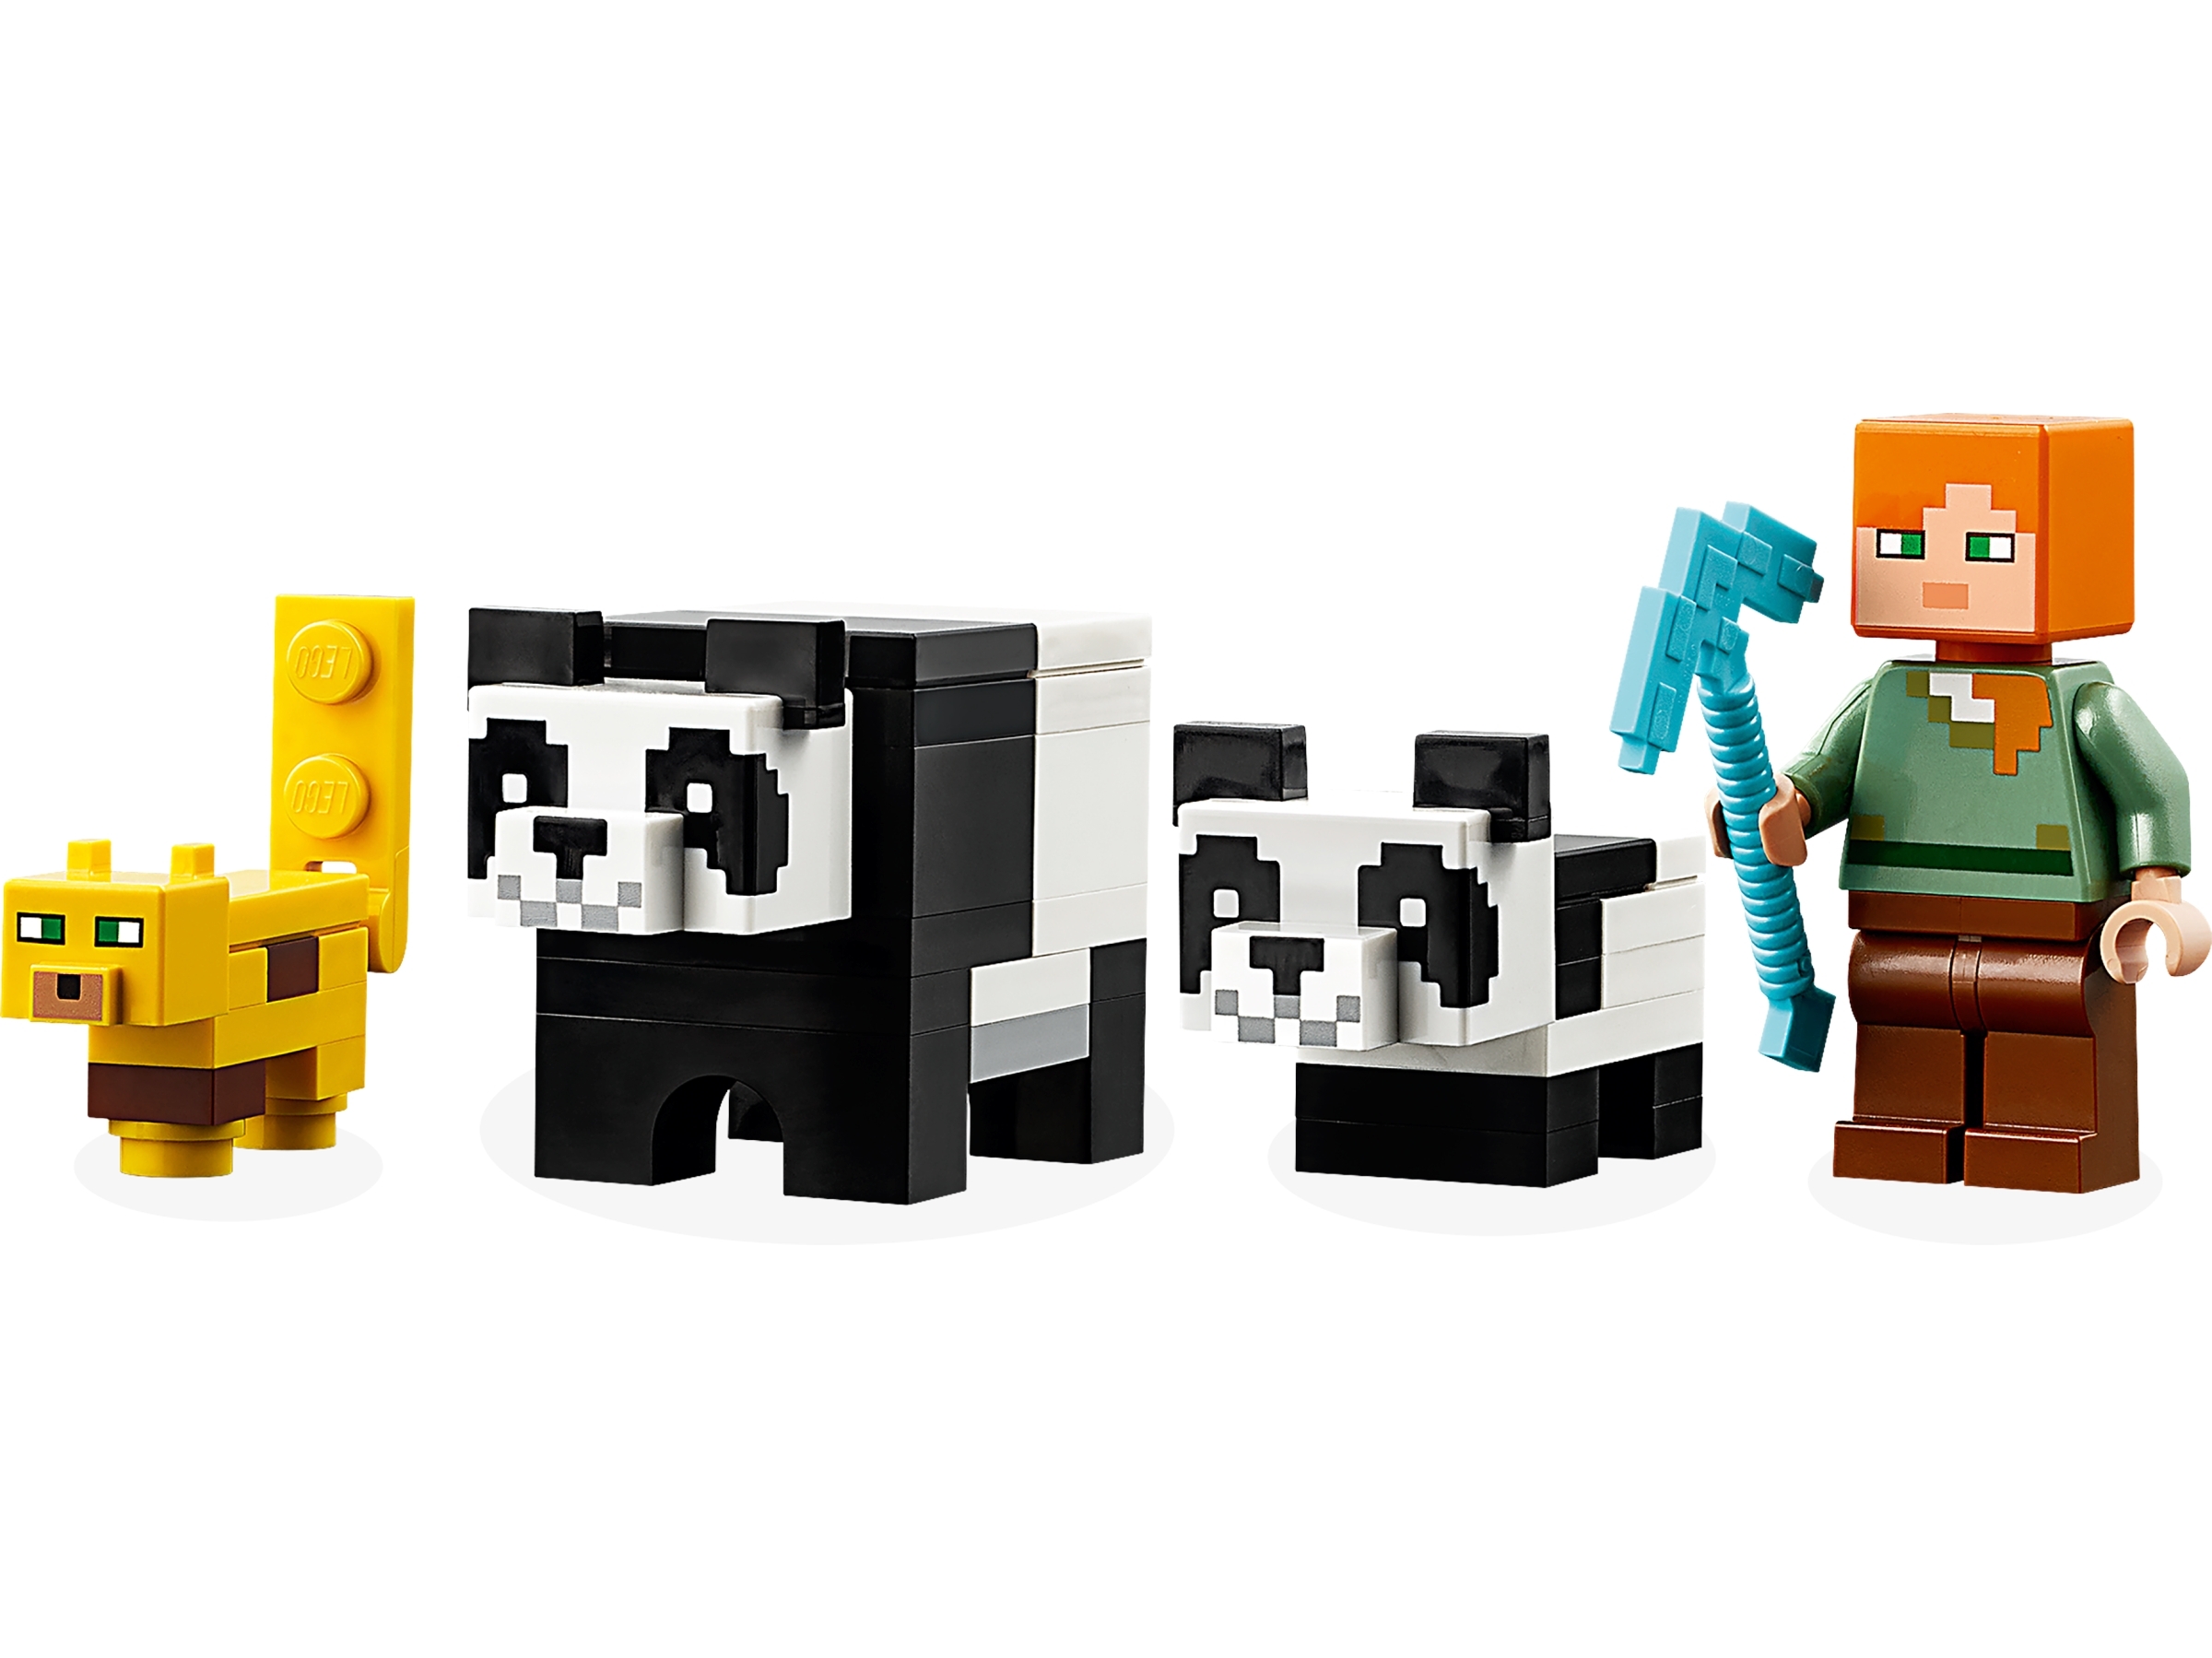 Lego 21158 Minecraft The Panda Nursery 